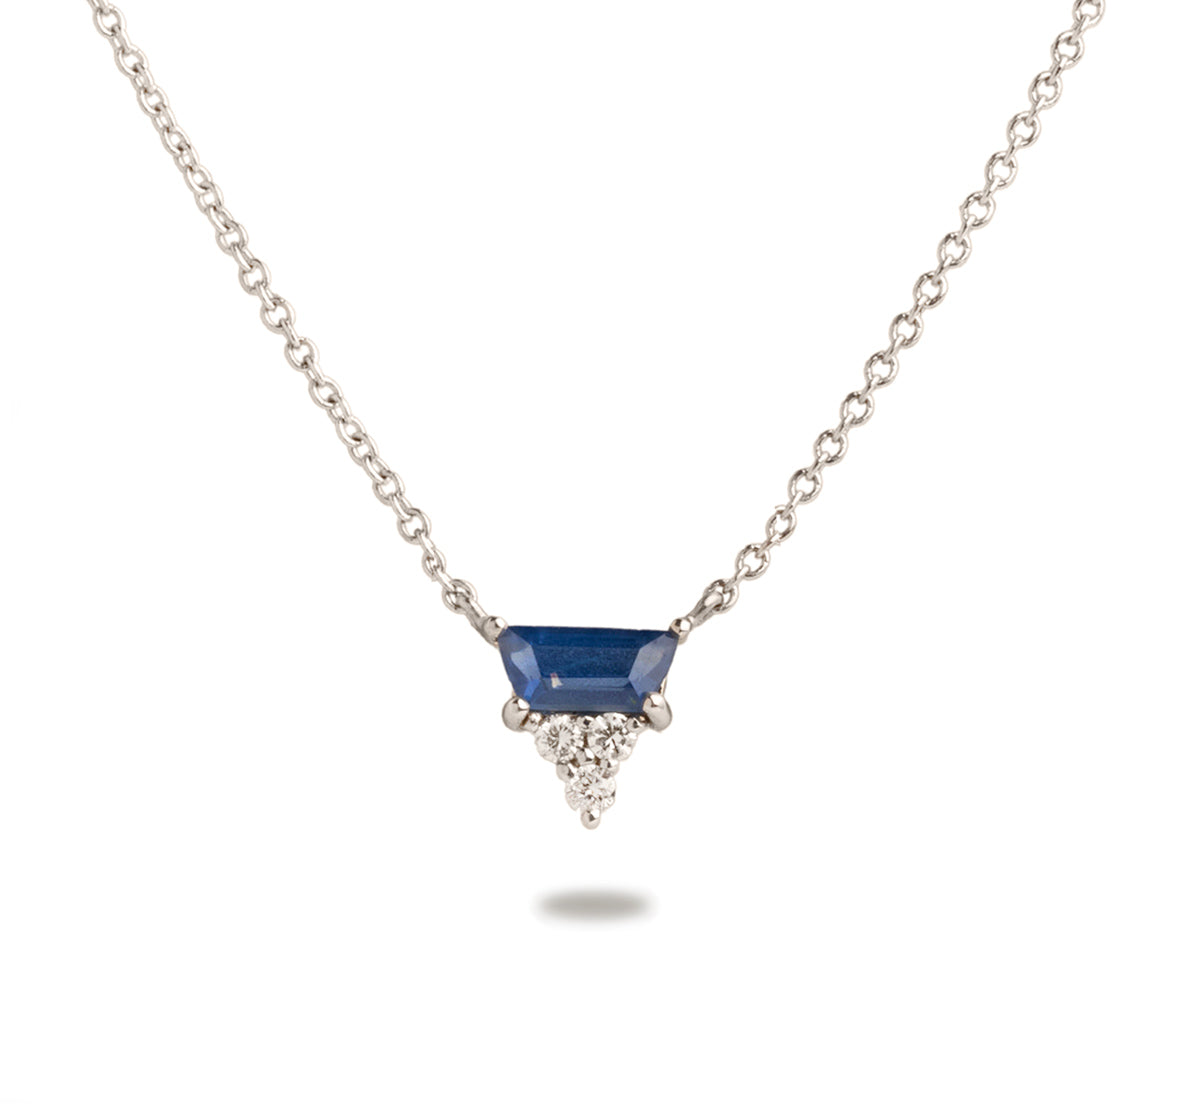 14k gold trapezoid blue sapphire diamond accent pendant necklace 18"